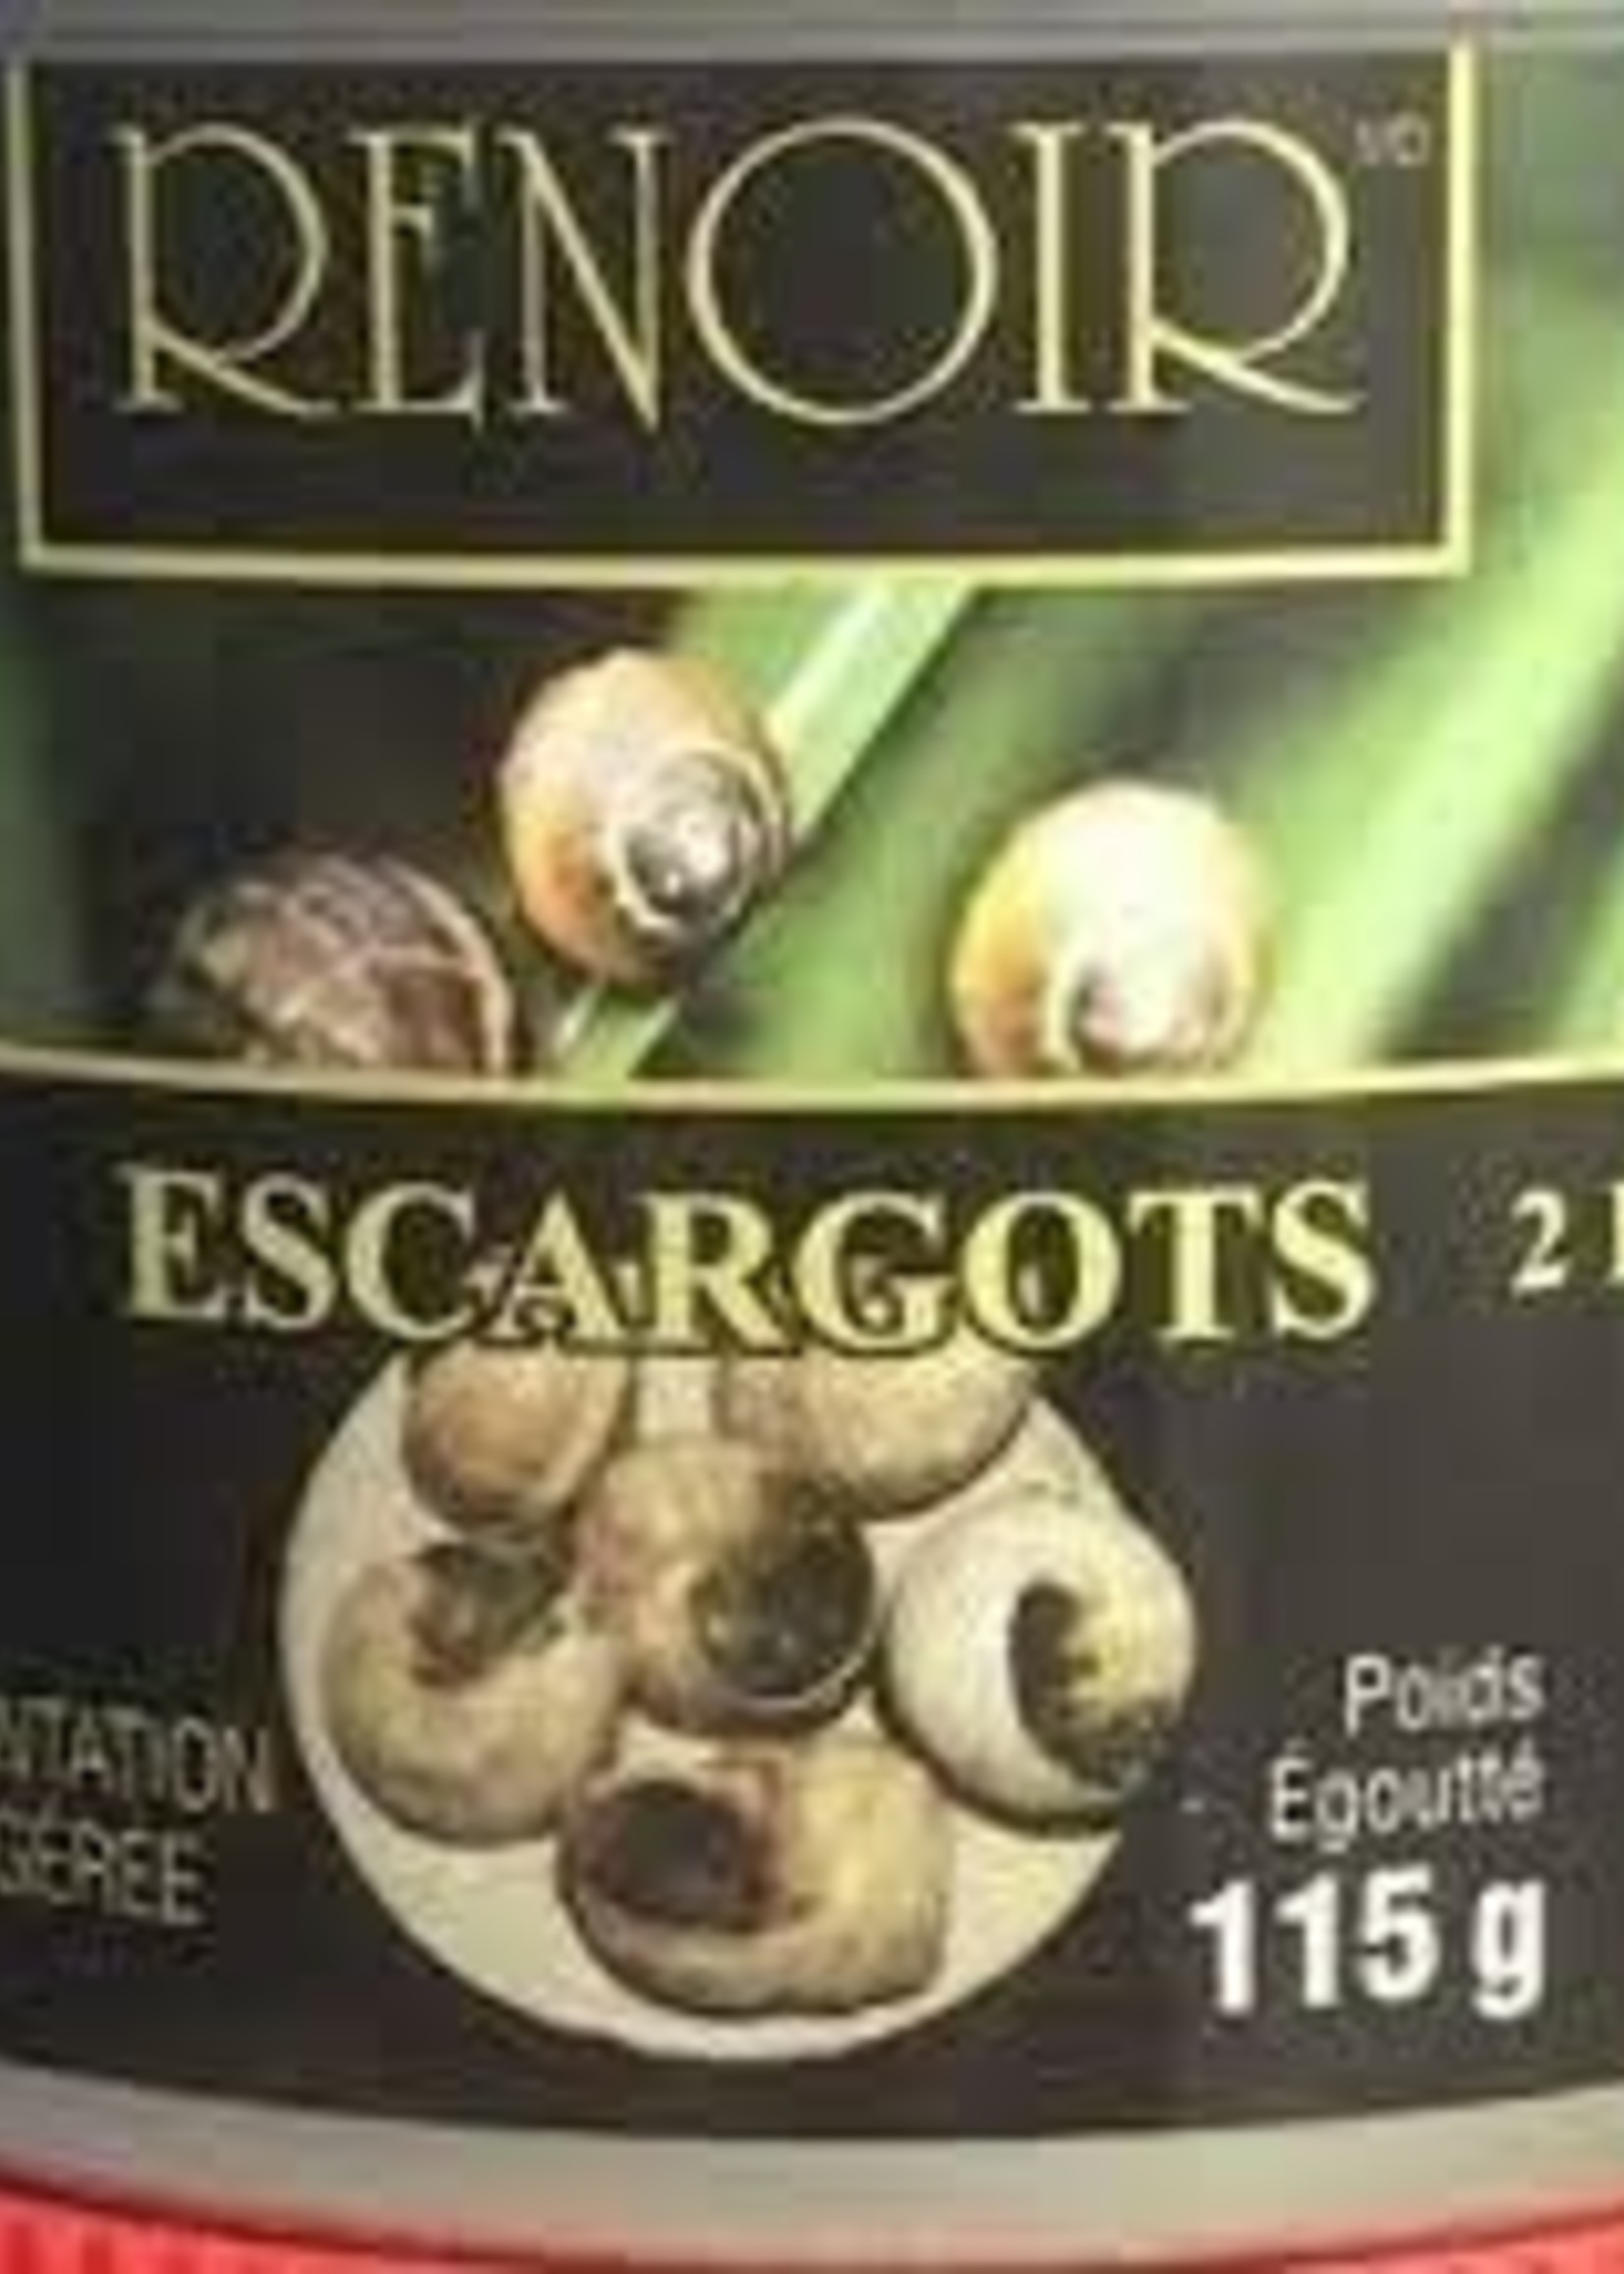 Renoir Escargots très gros 115g - Renoir